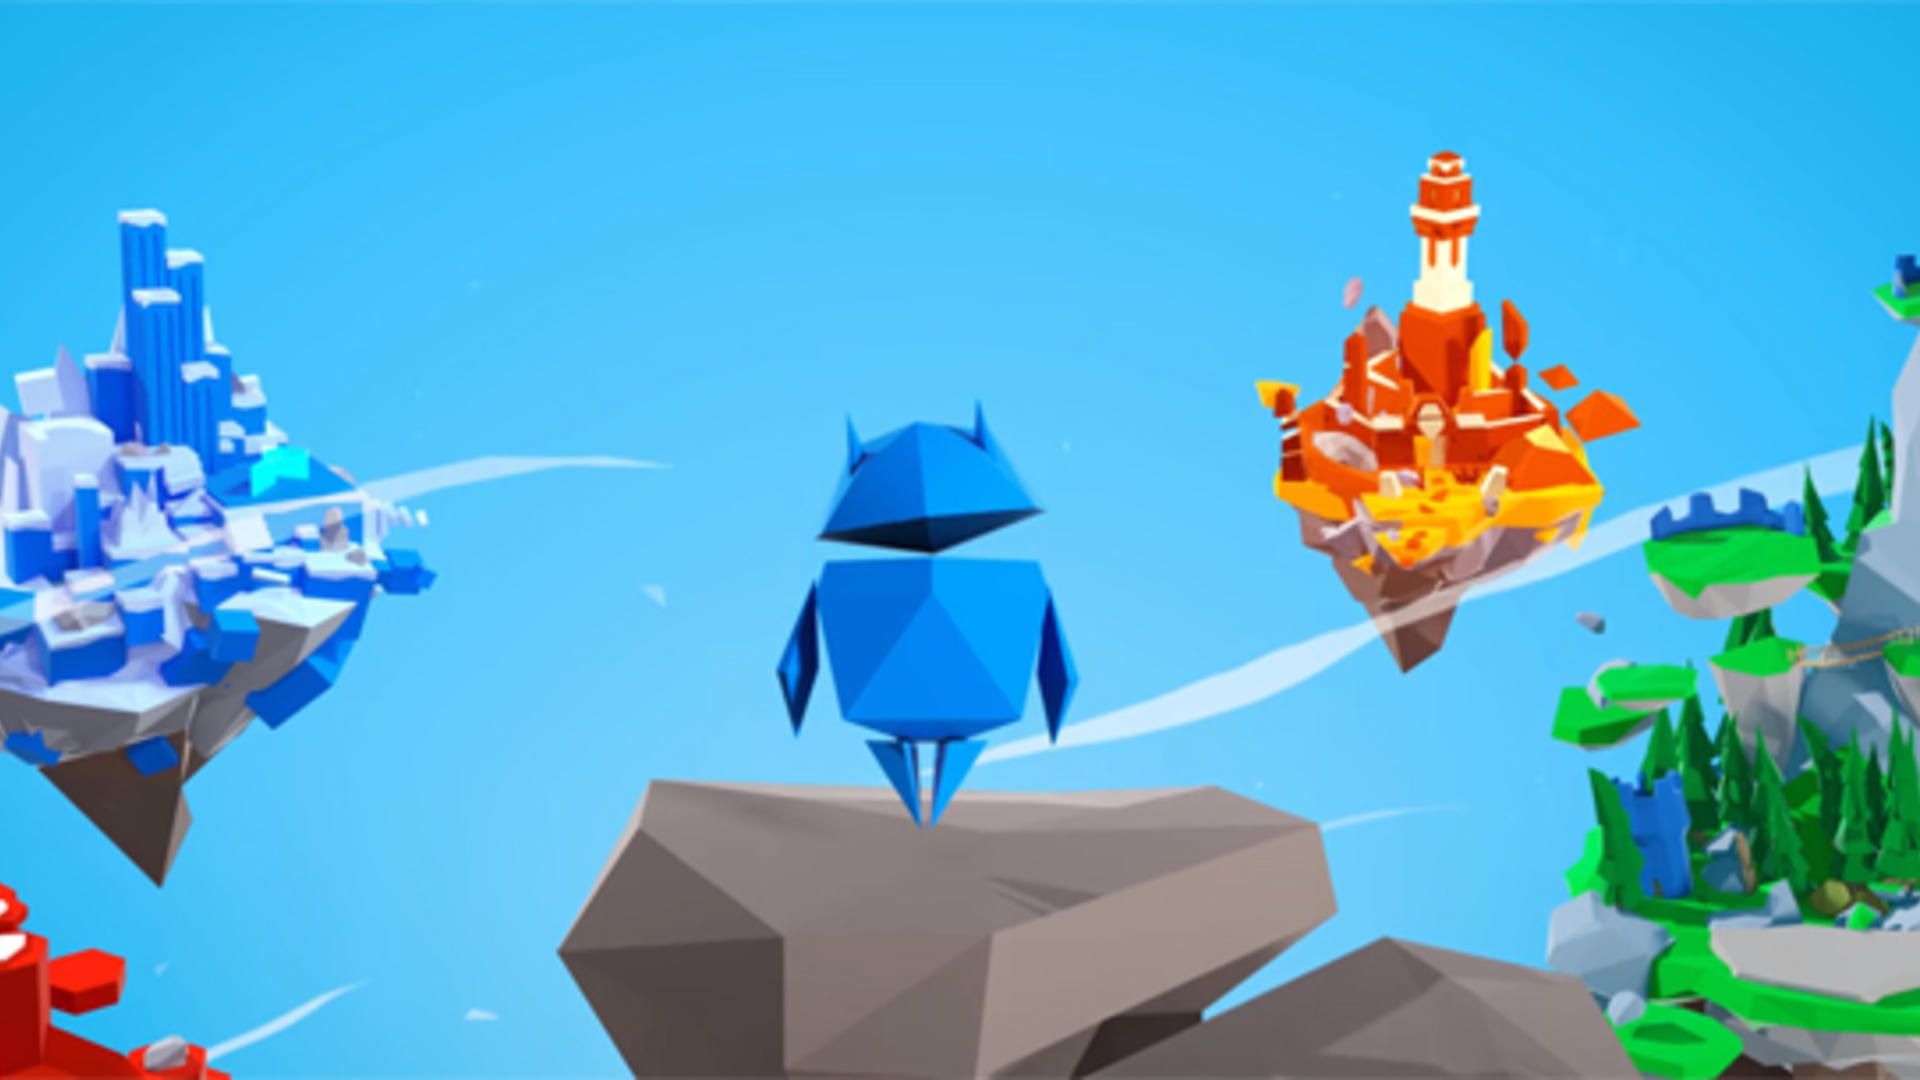 Google makes games to help teach internet sense, safety and positivity to kids. Rock Paper Shotgun